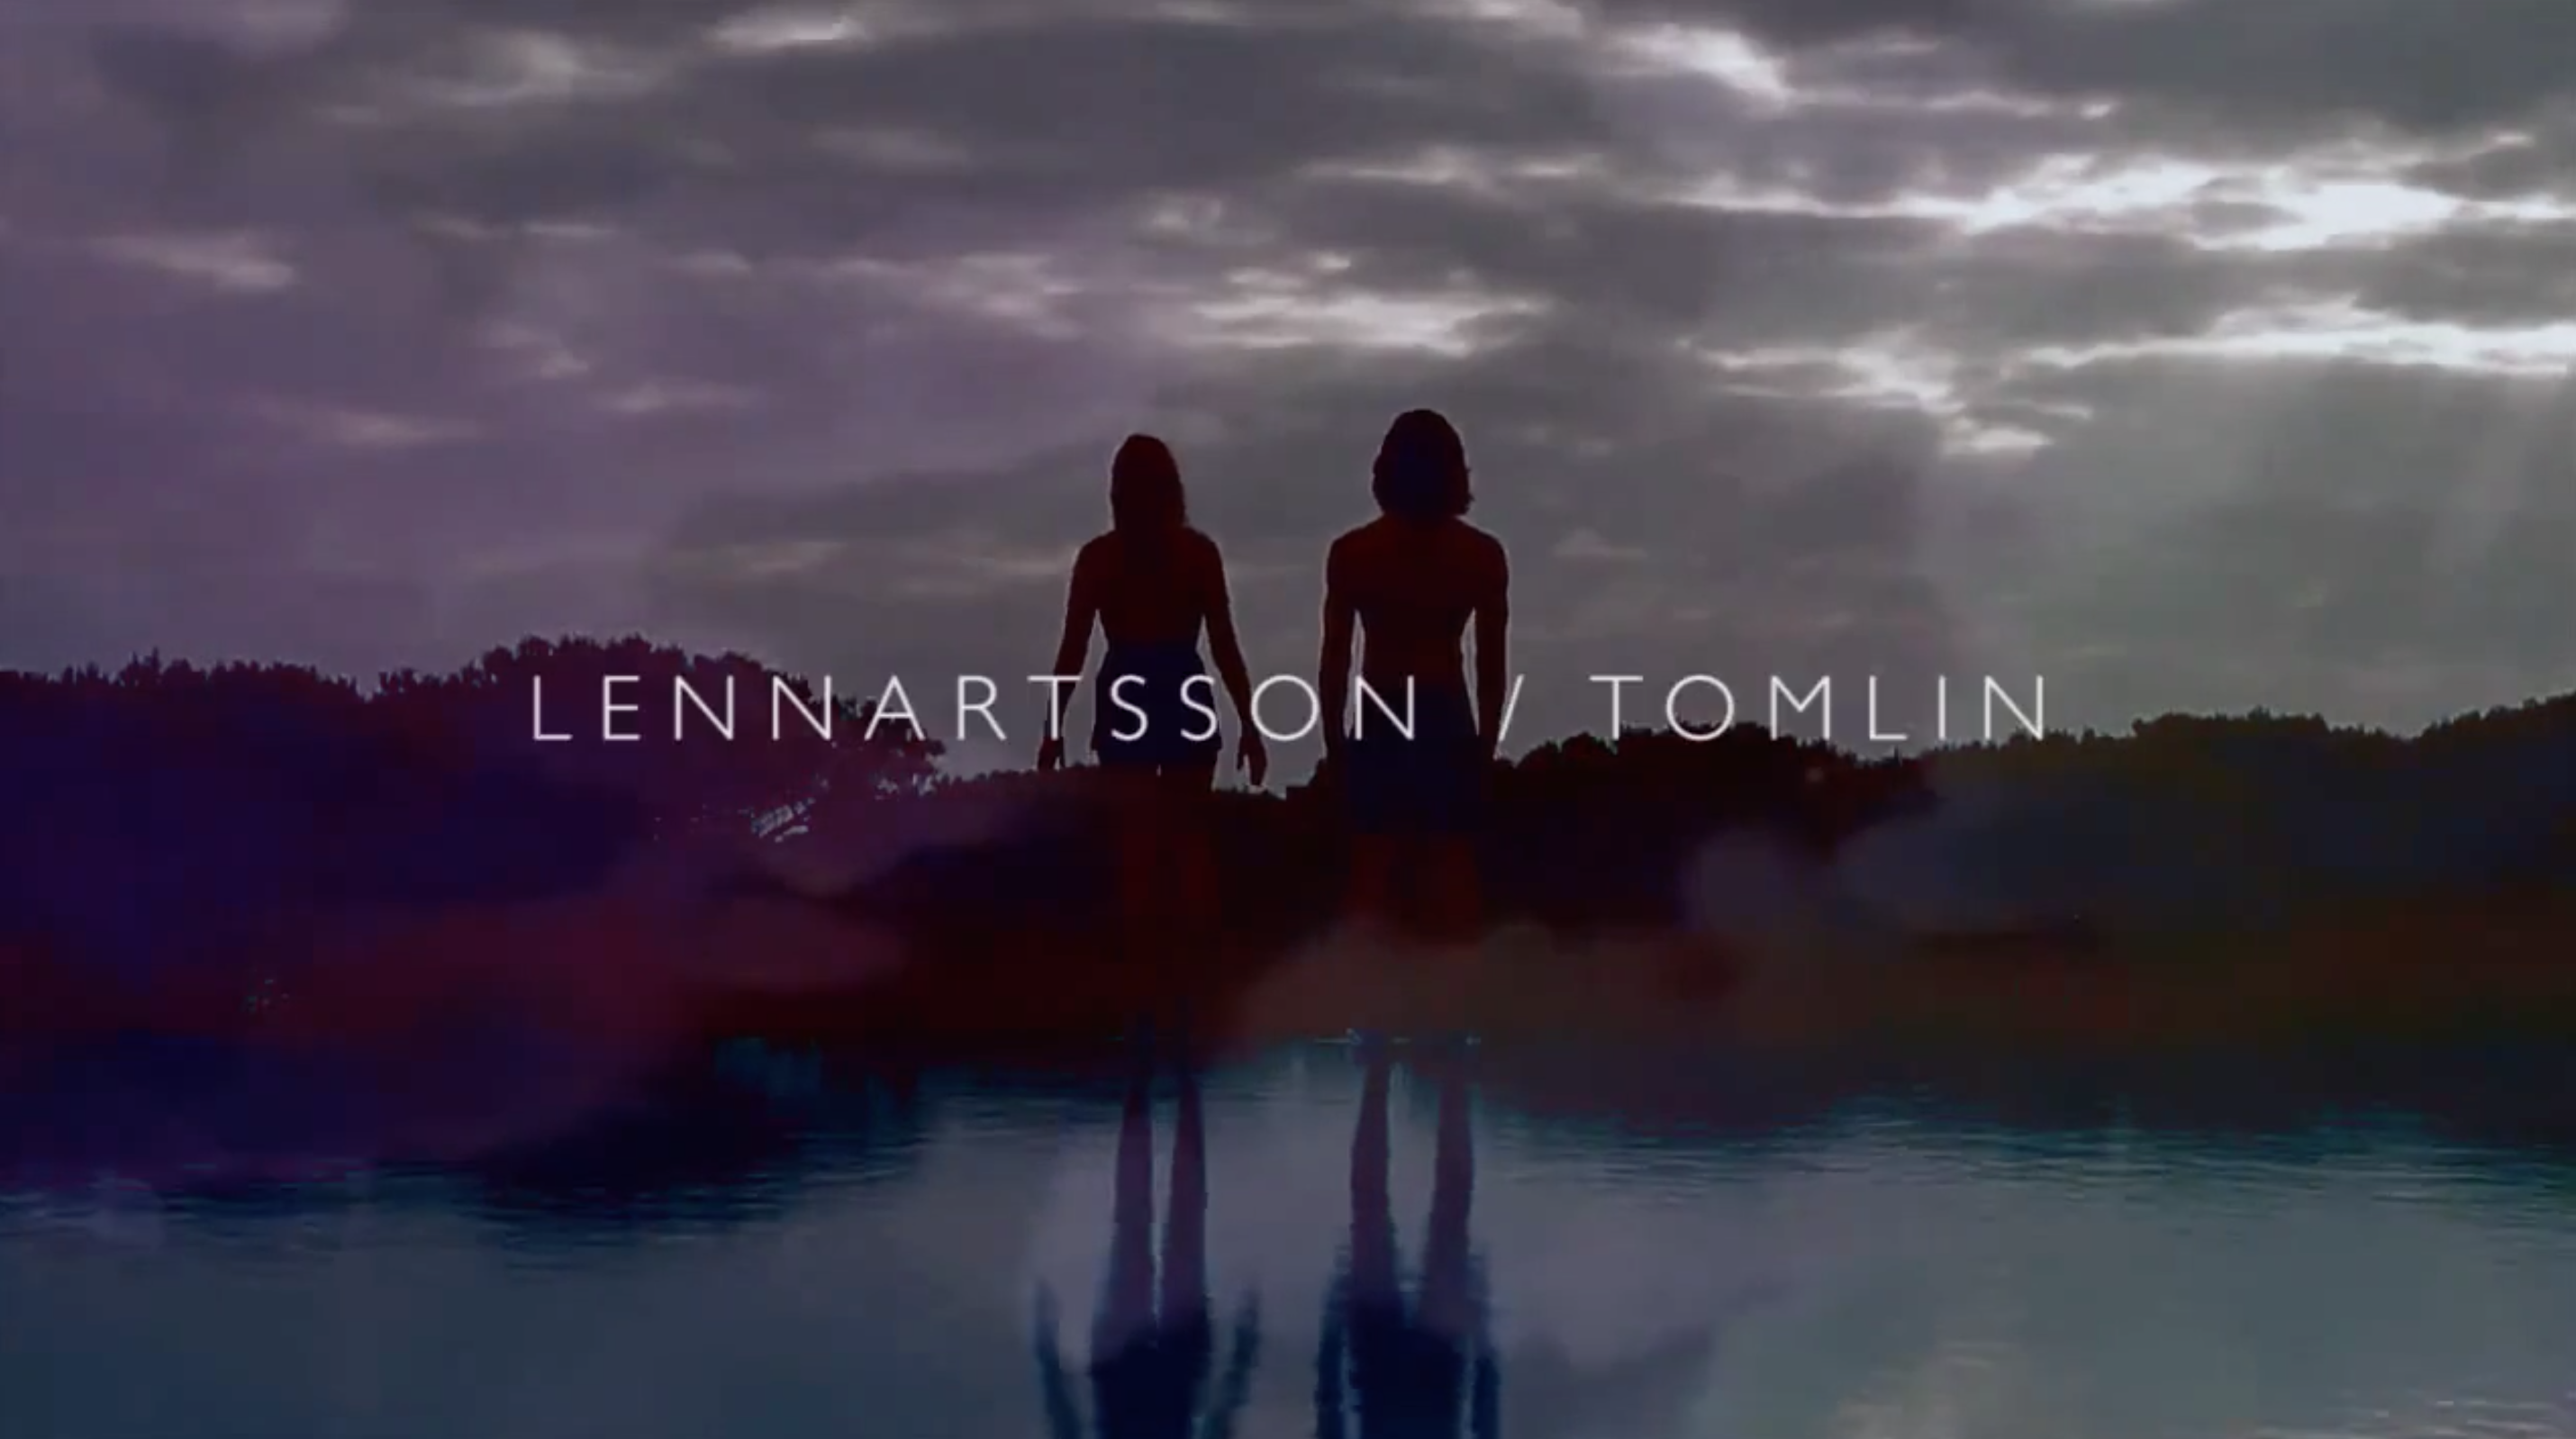 Self promo - Lennartsson & Tomlin